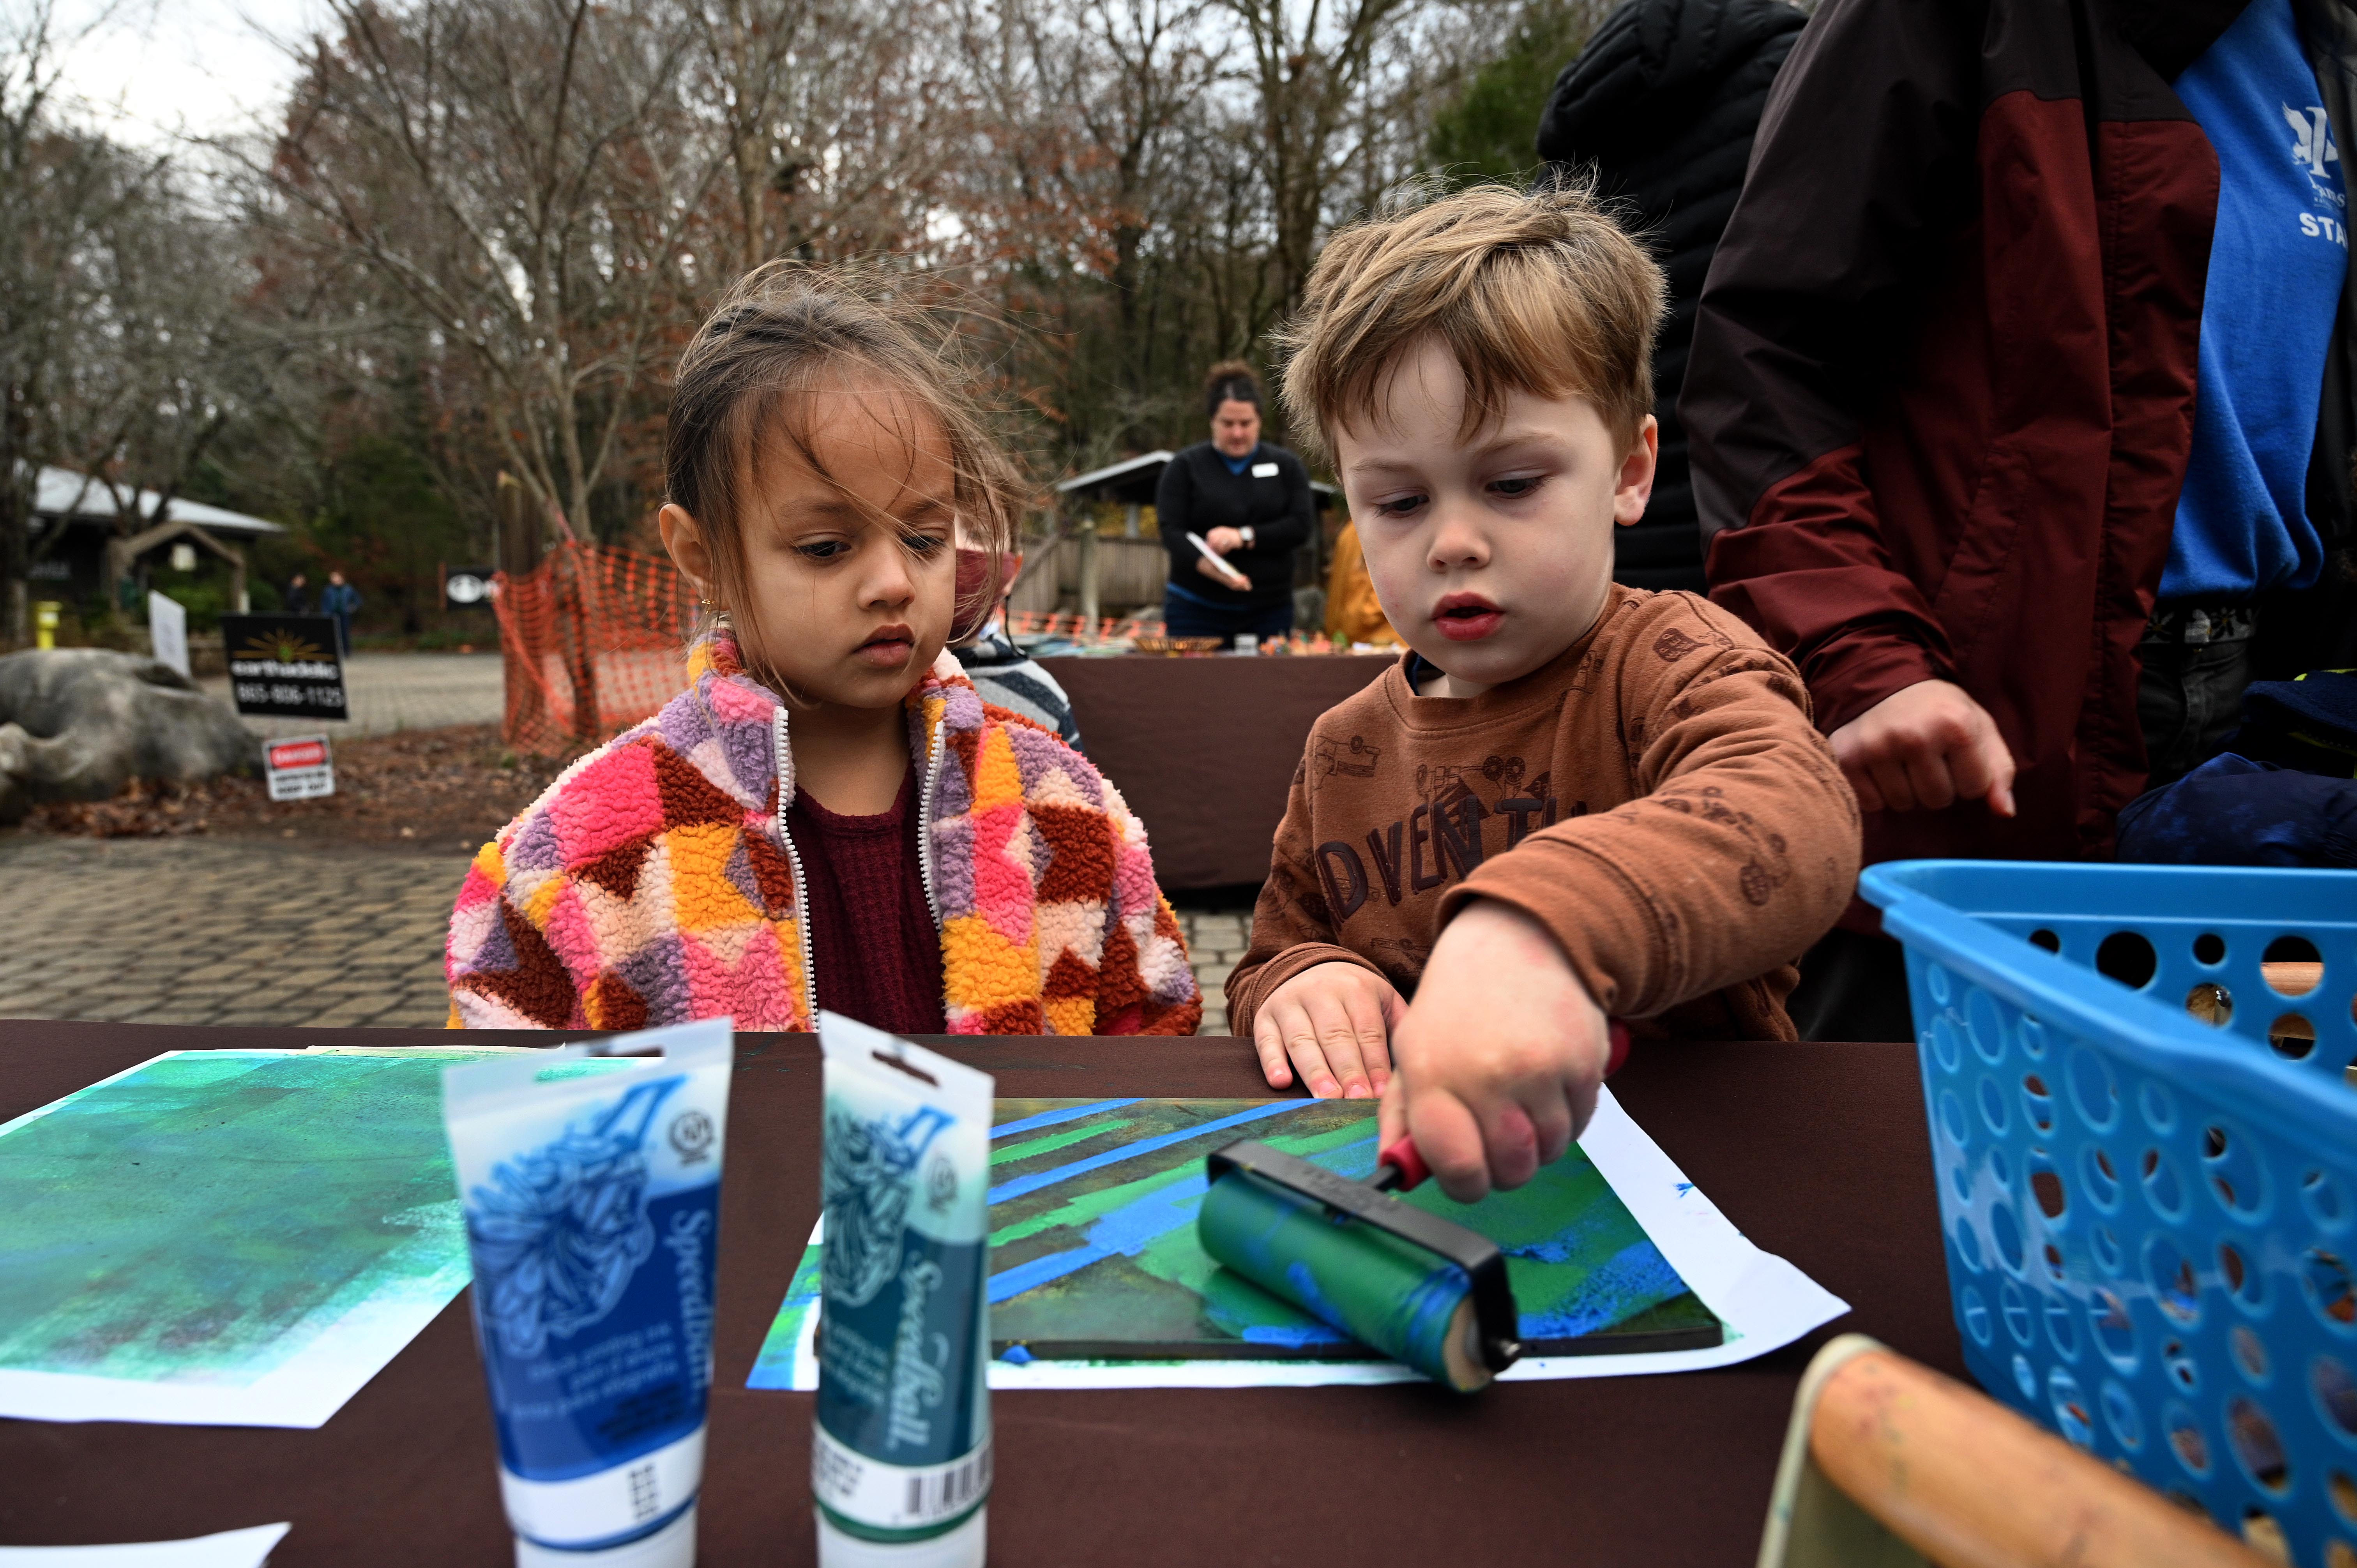 preschool boy rolls blue and green ink onto paper while preschool girl looks on